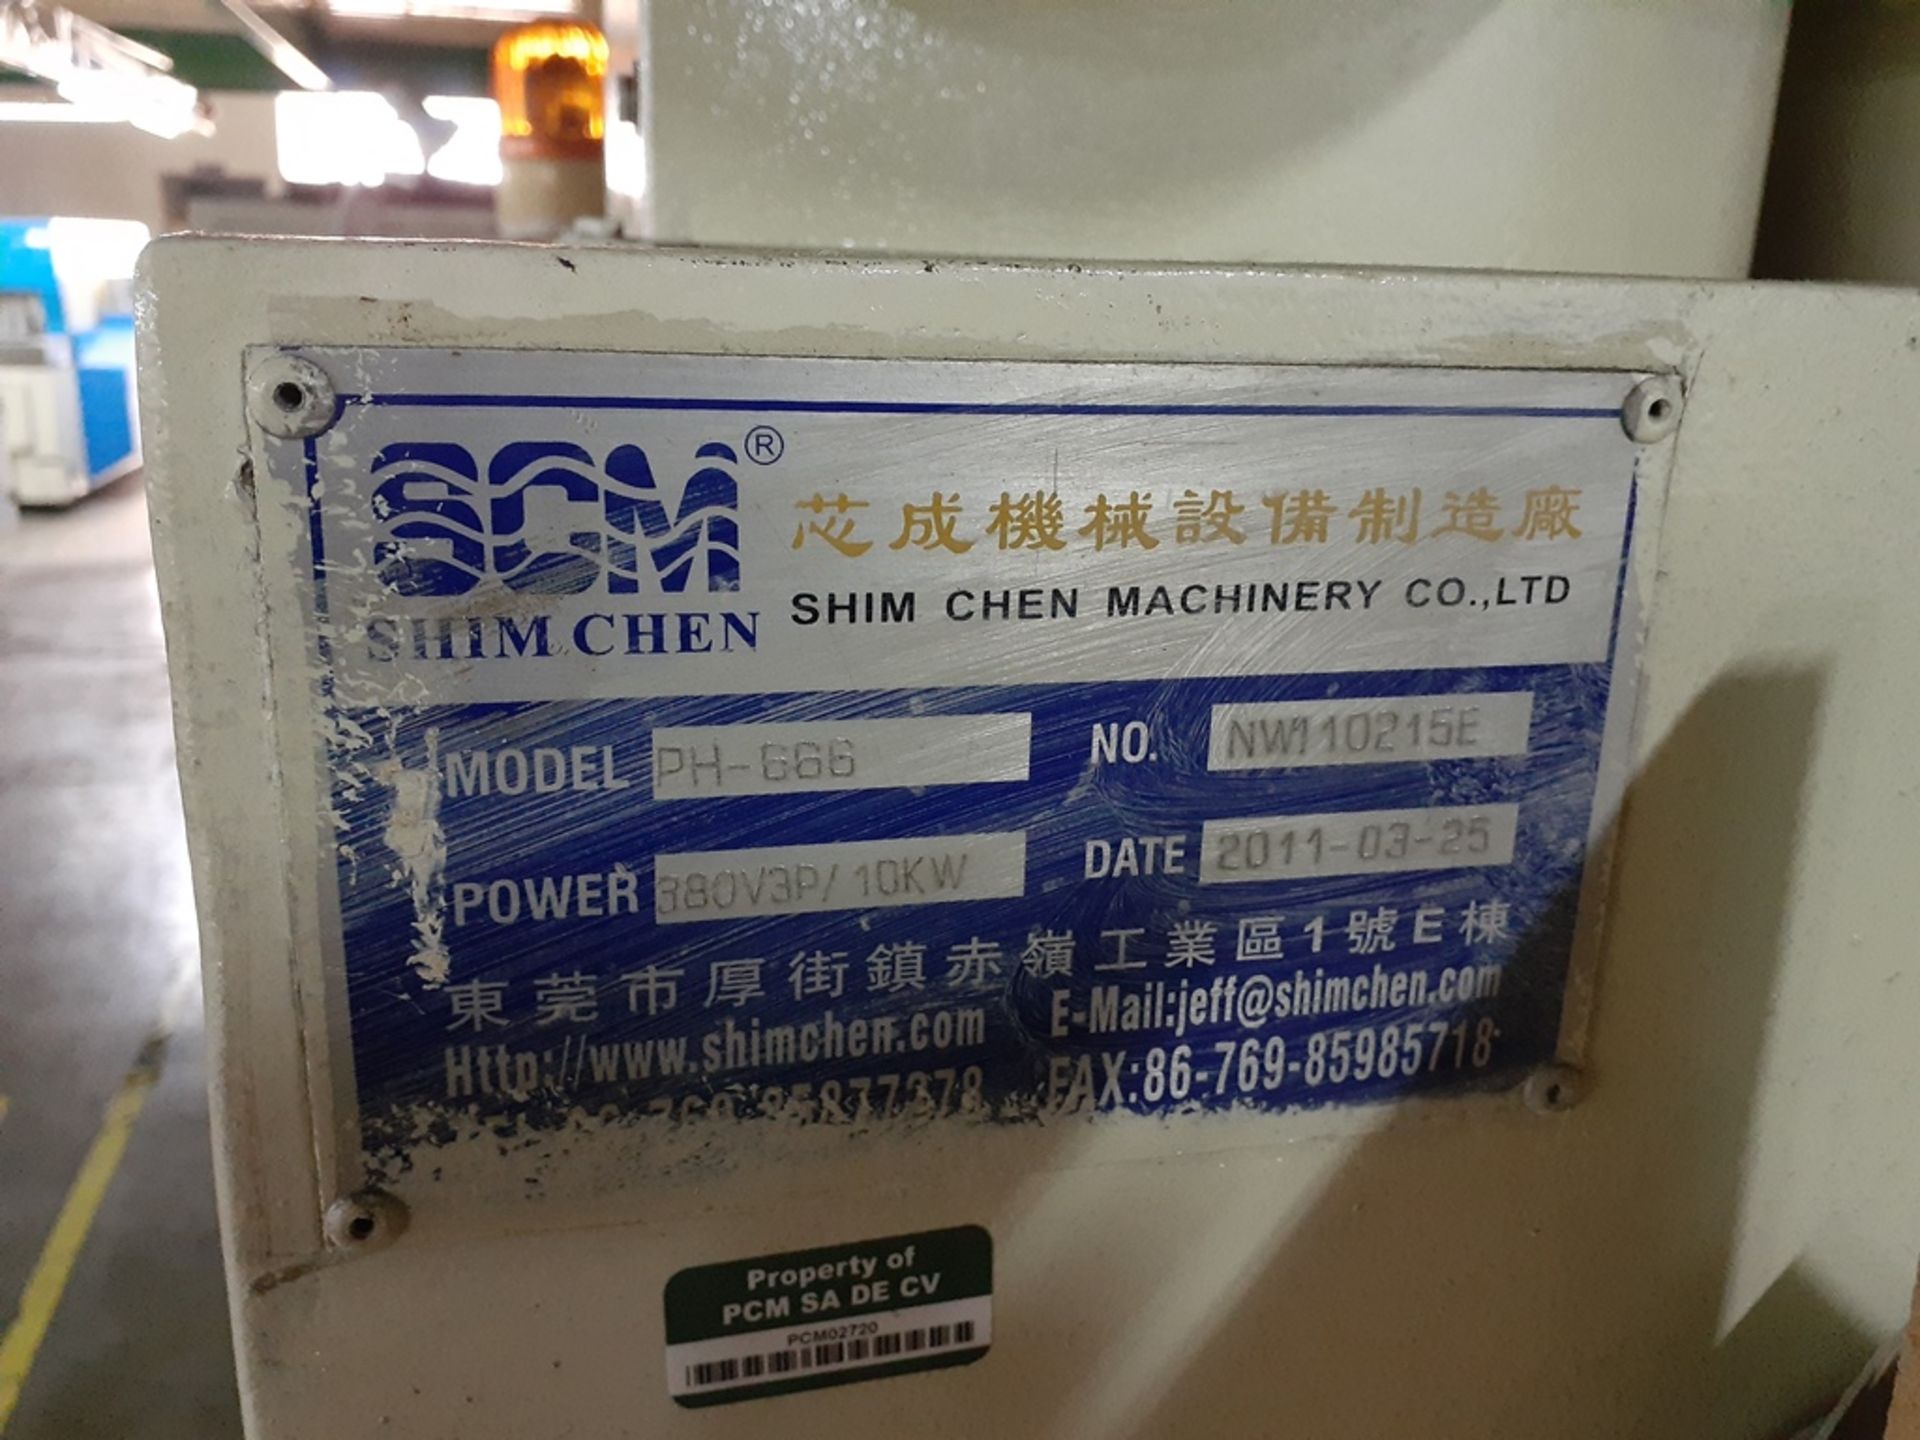 Máquina de curado UV marca Shim Chen Machinery, Modelo: PH-666 - Image 19 of 19